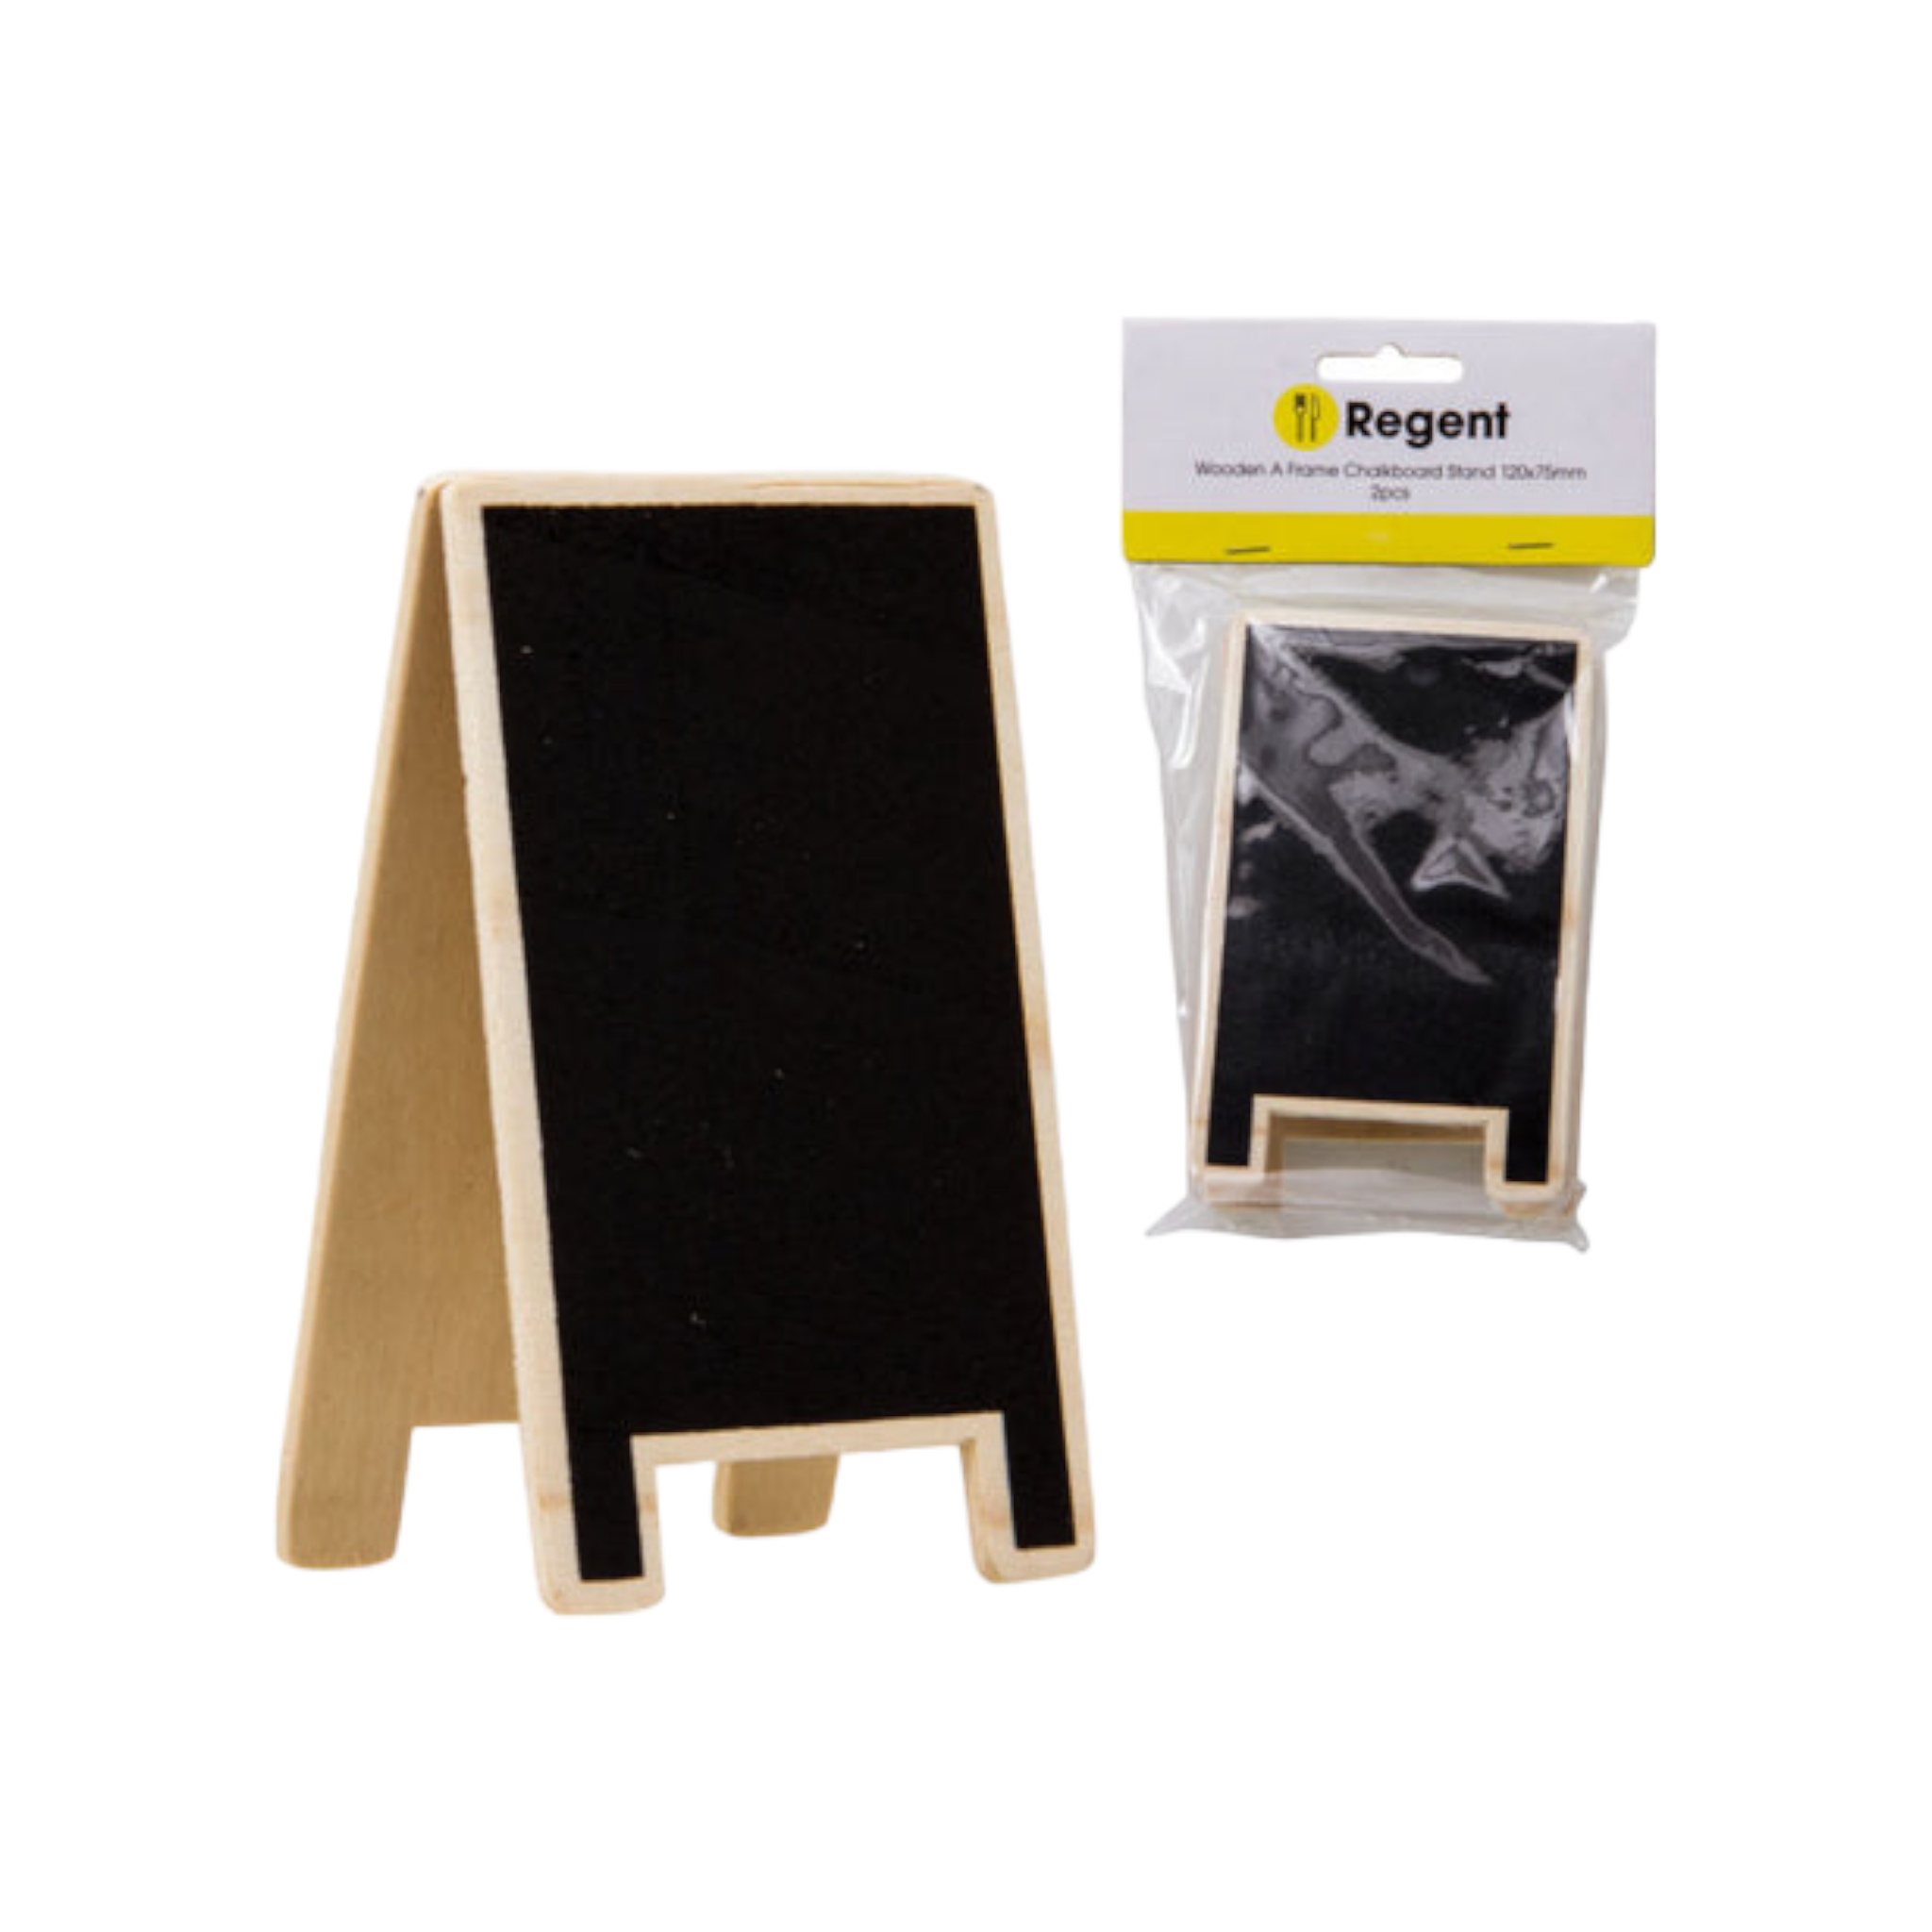 Regent Wooden A Frame Chalkboard Stand 120x75mm 2pack 35130